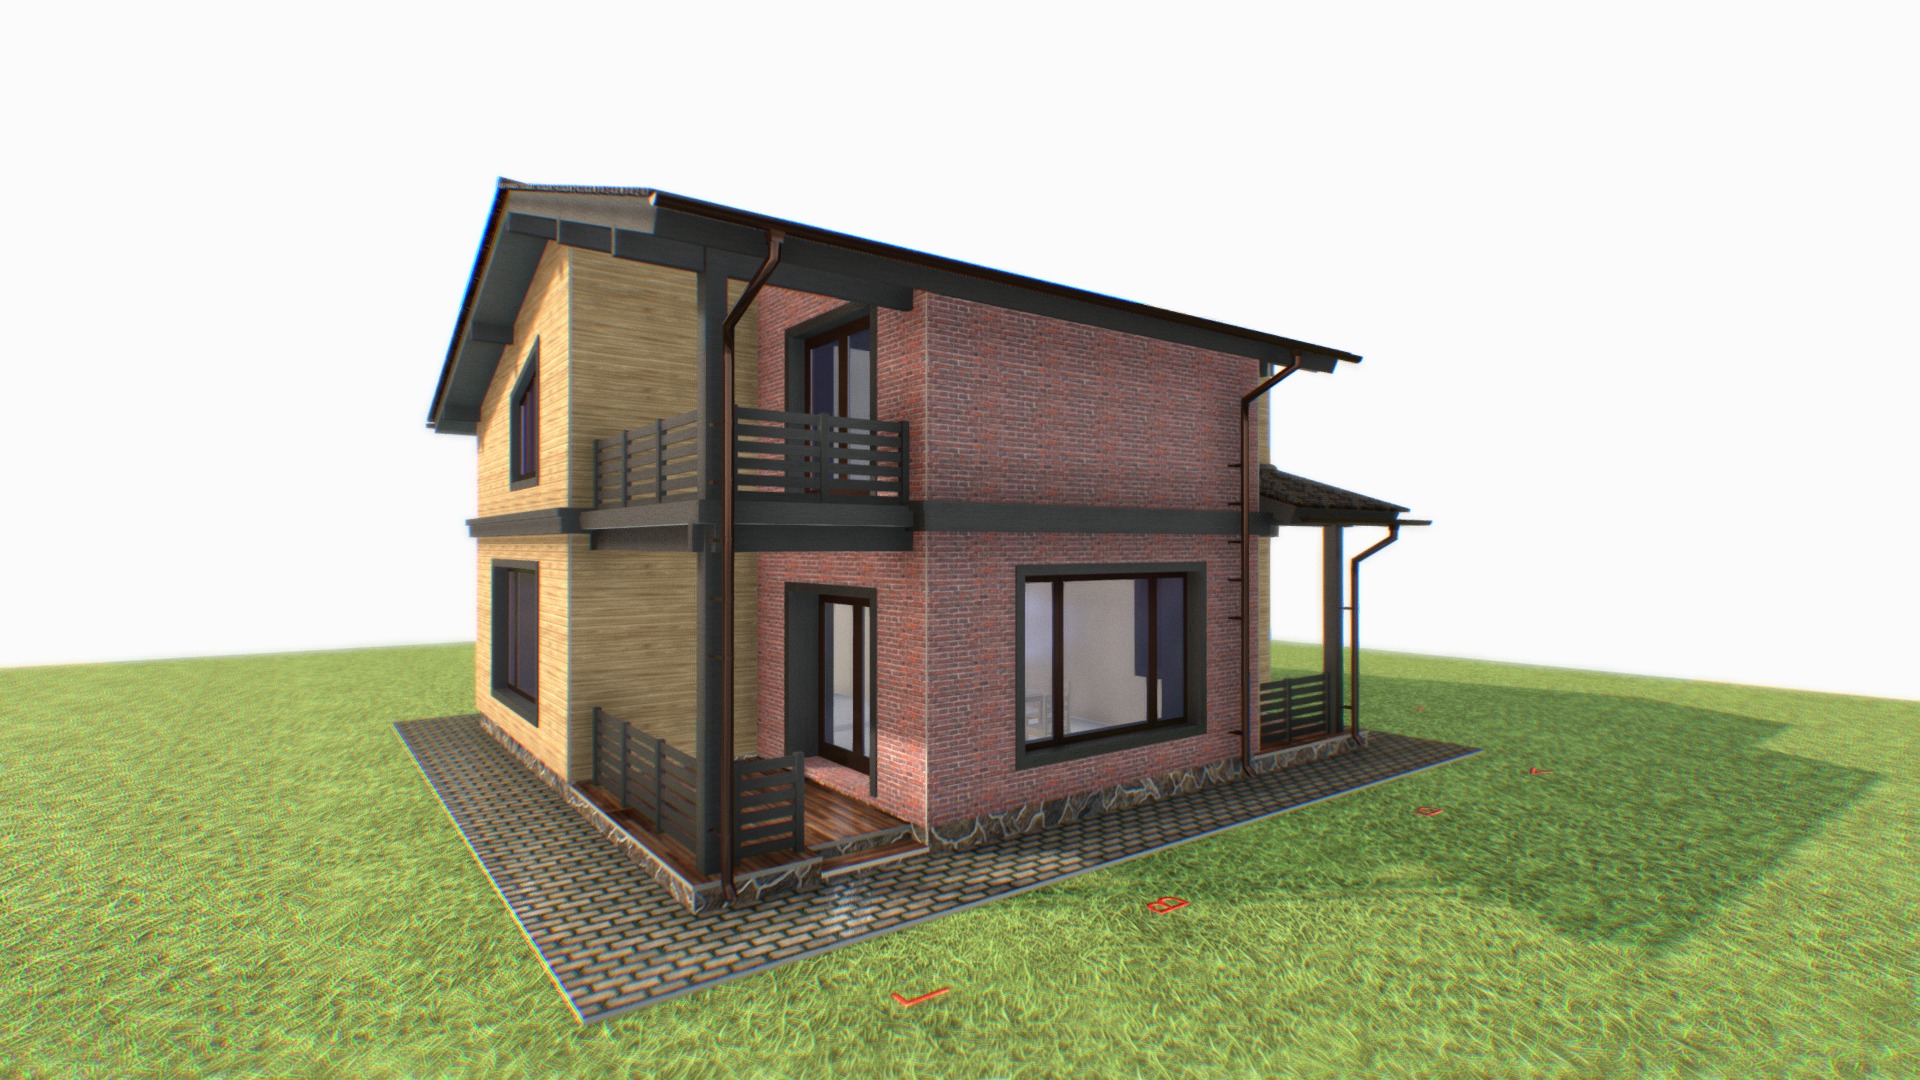 3D model Эскизный проект 2-х этажного коттеджа - This is a 3D model of the Эскизный проект 2-х этажного коттеджа. The 3D model is about a house on a grassy hill.